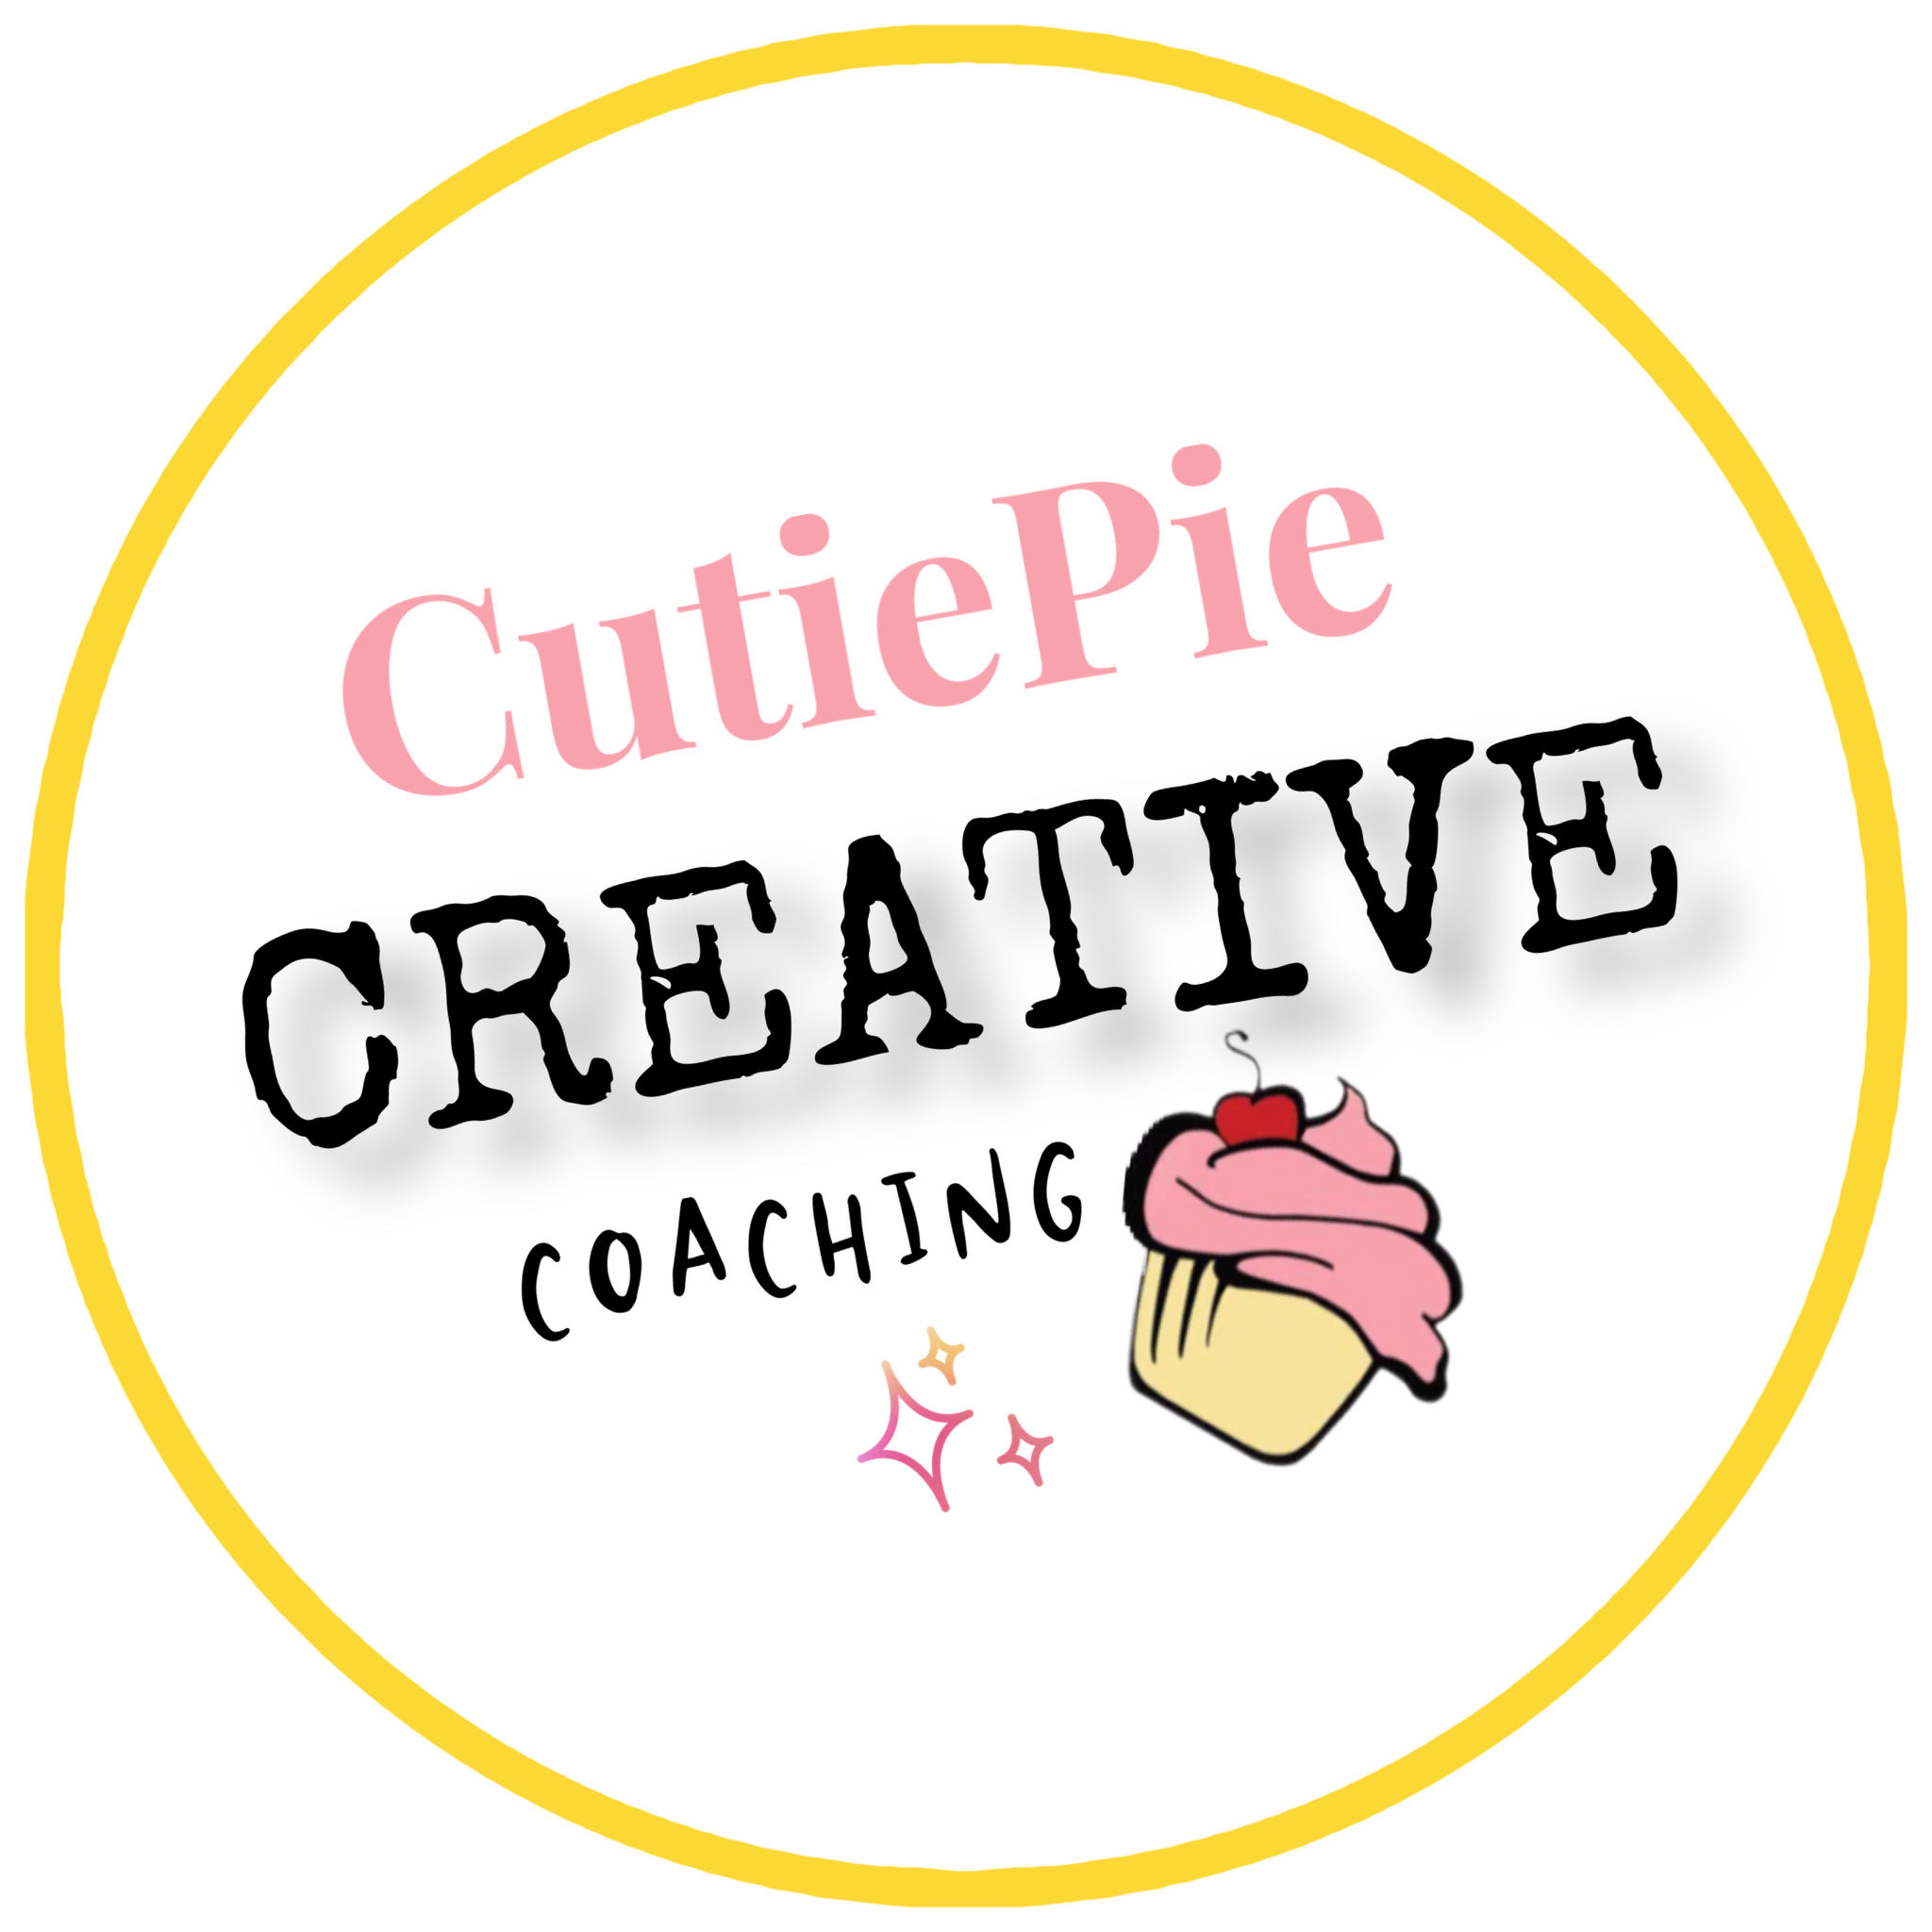 CutiePie Creative Content & Coaching